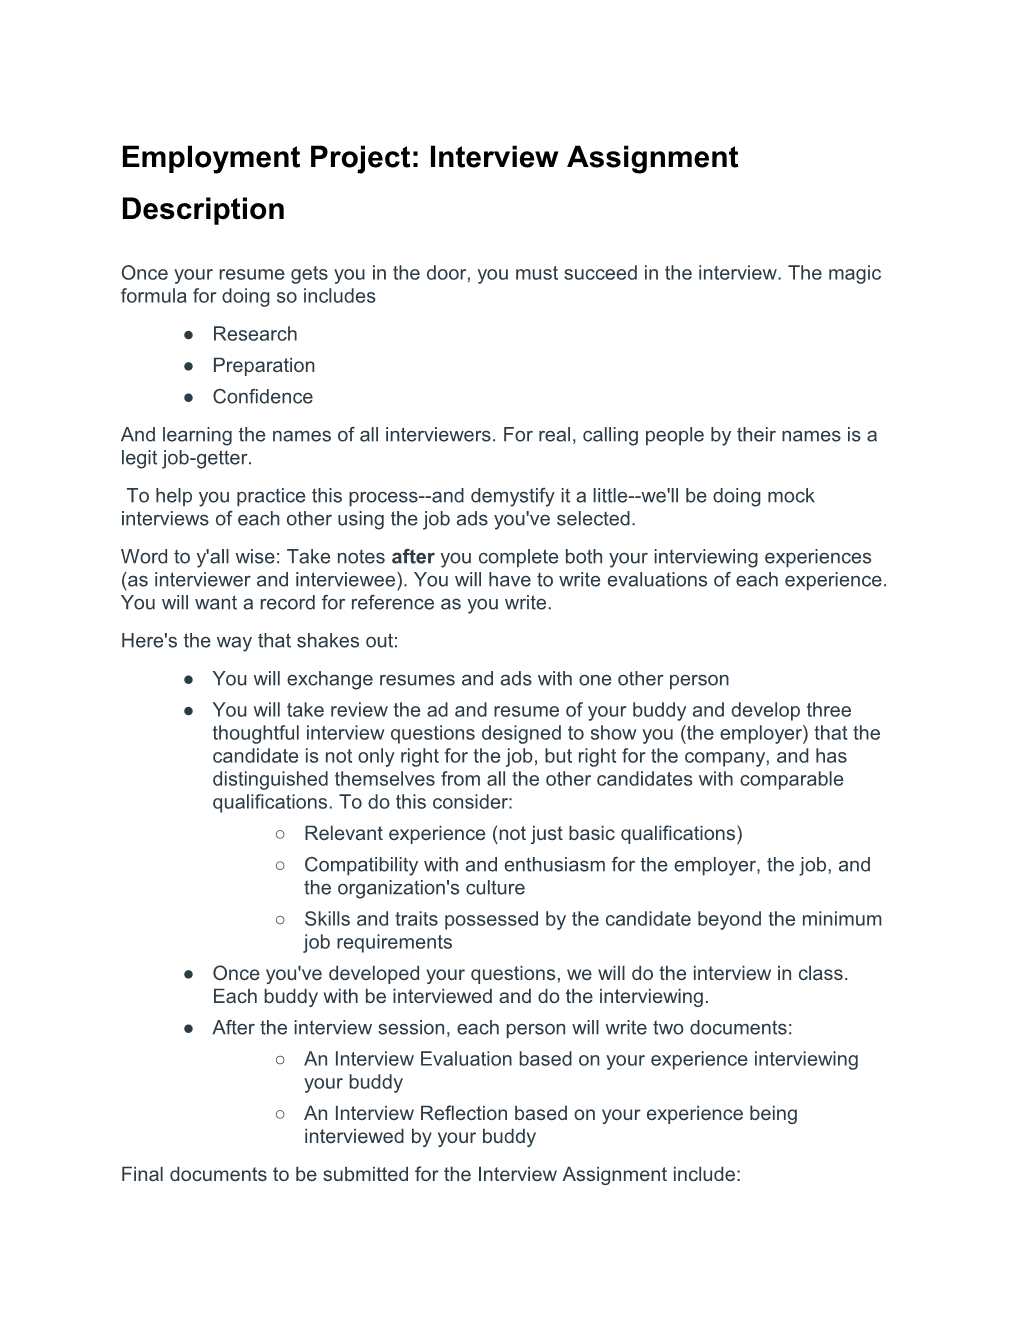 Employment Project: Interview Assignment Description